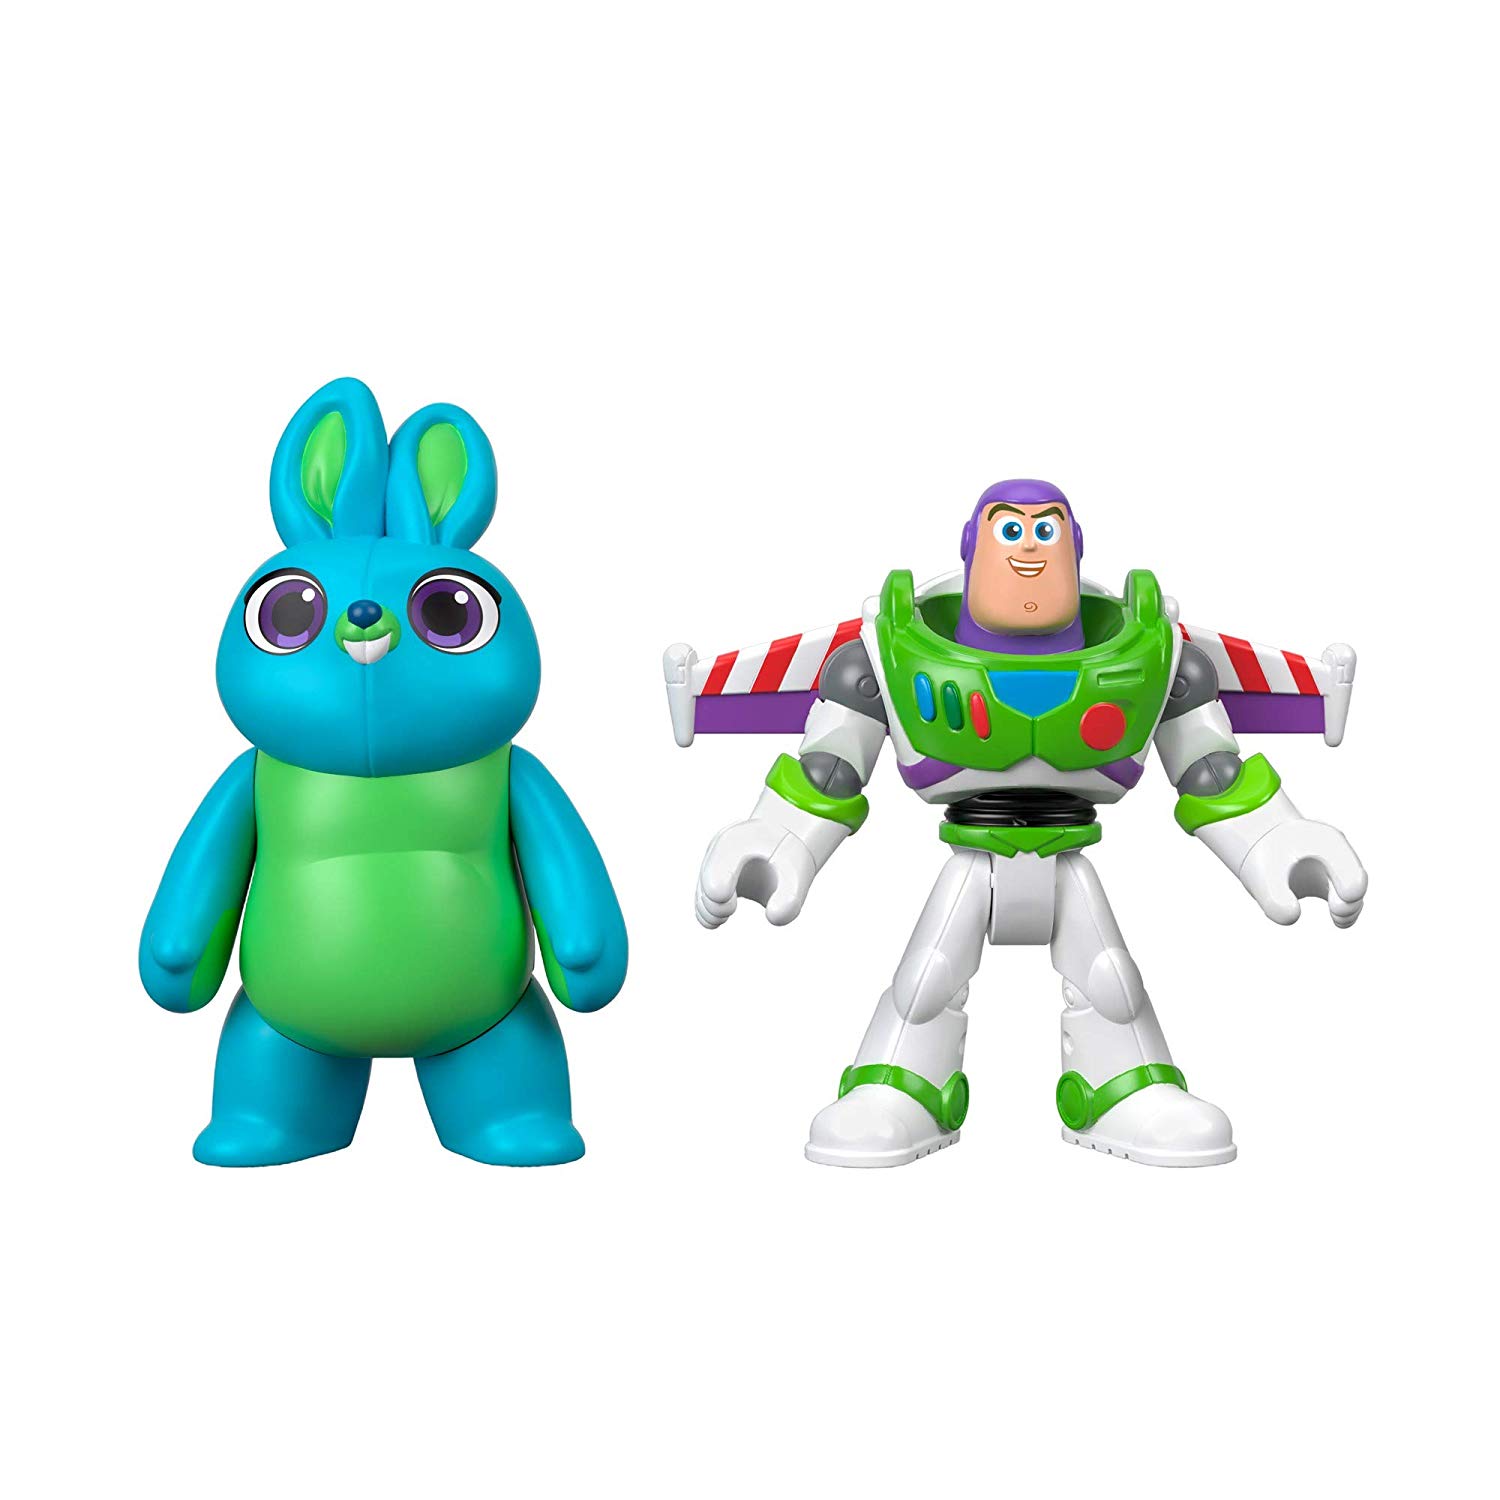 Fisher-Price Gbg91 Imaginext Disney Pixar Toy Story 4 Bunny And Buzz Lighty